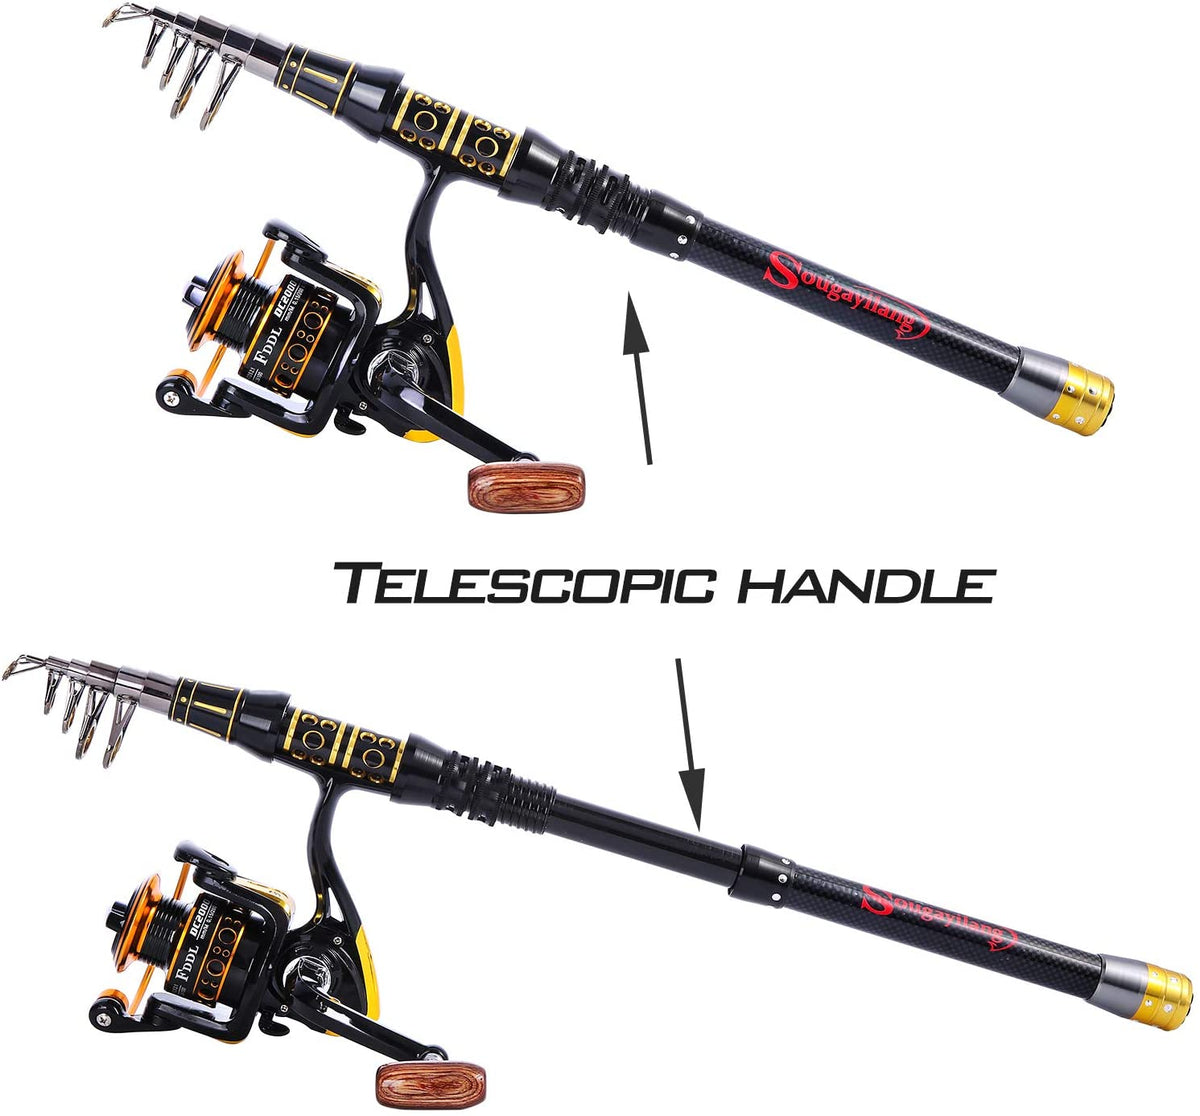 Sougayilang Fishing Rod Reel Combos Telescopic Fishing Pole with Spin